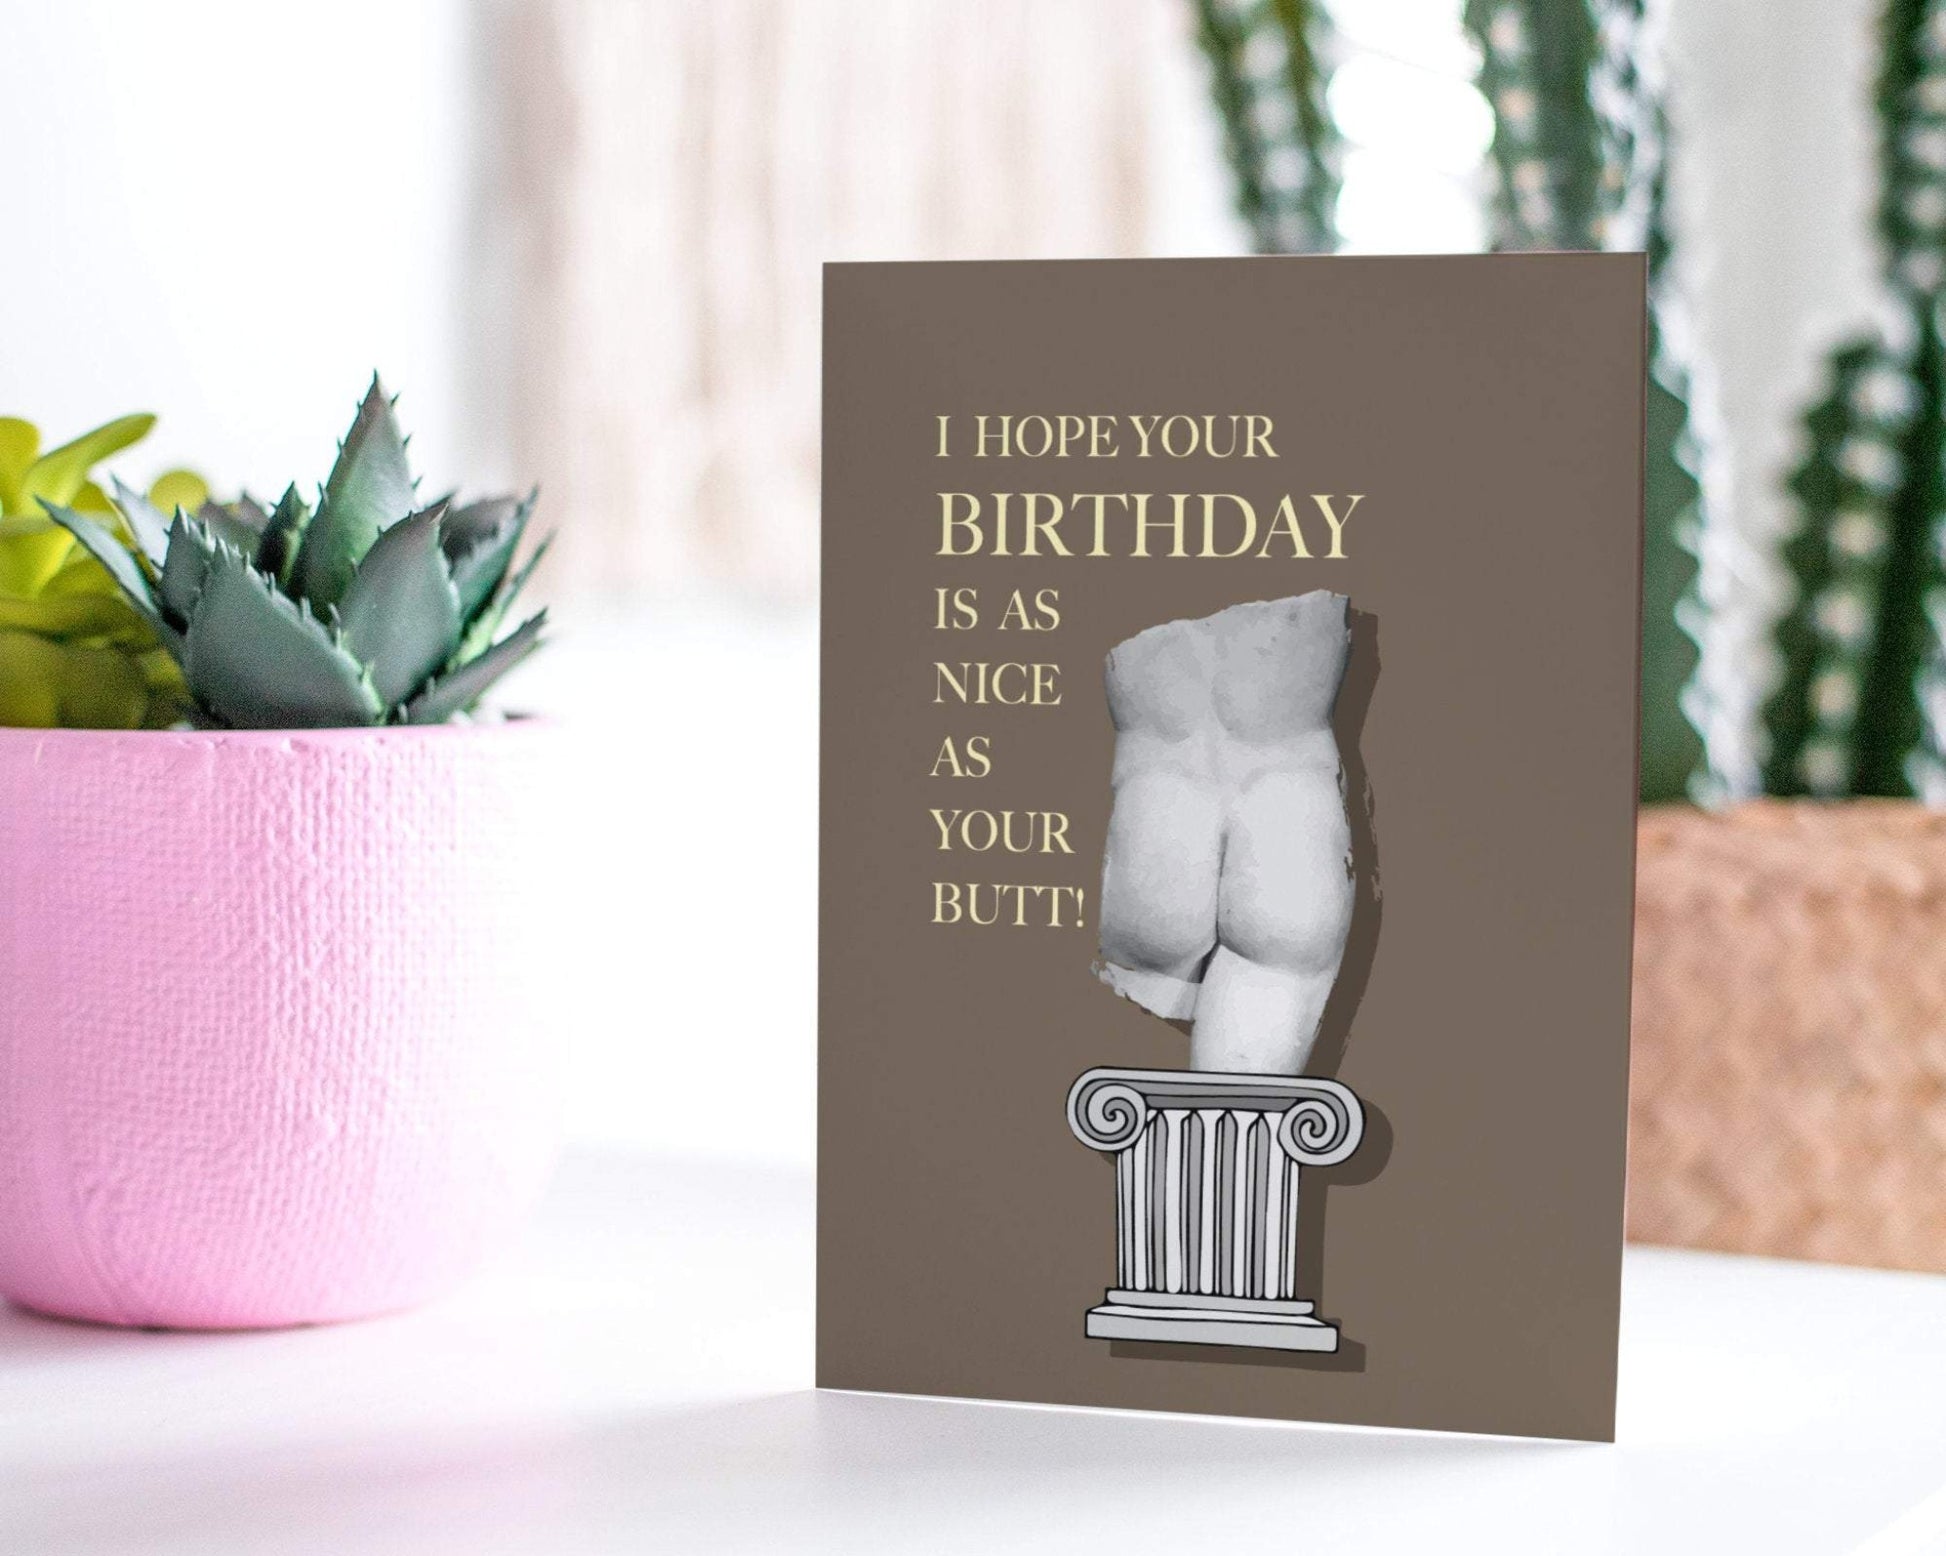 Nice Butt! Happy Birthday Funny Greeting Card.